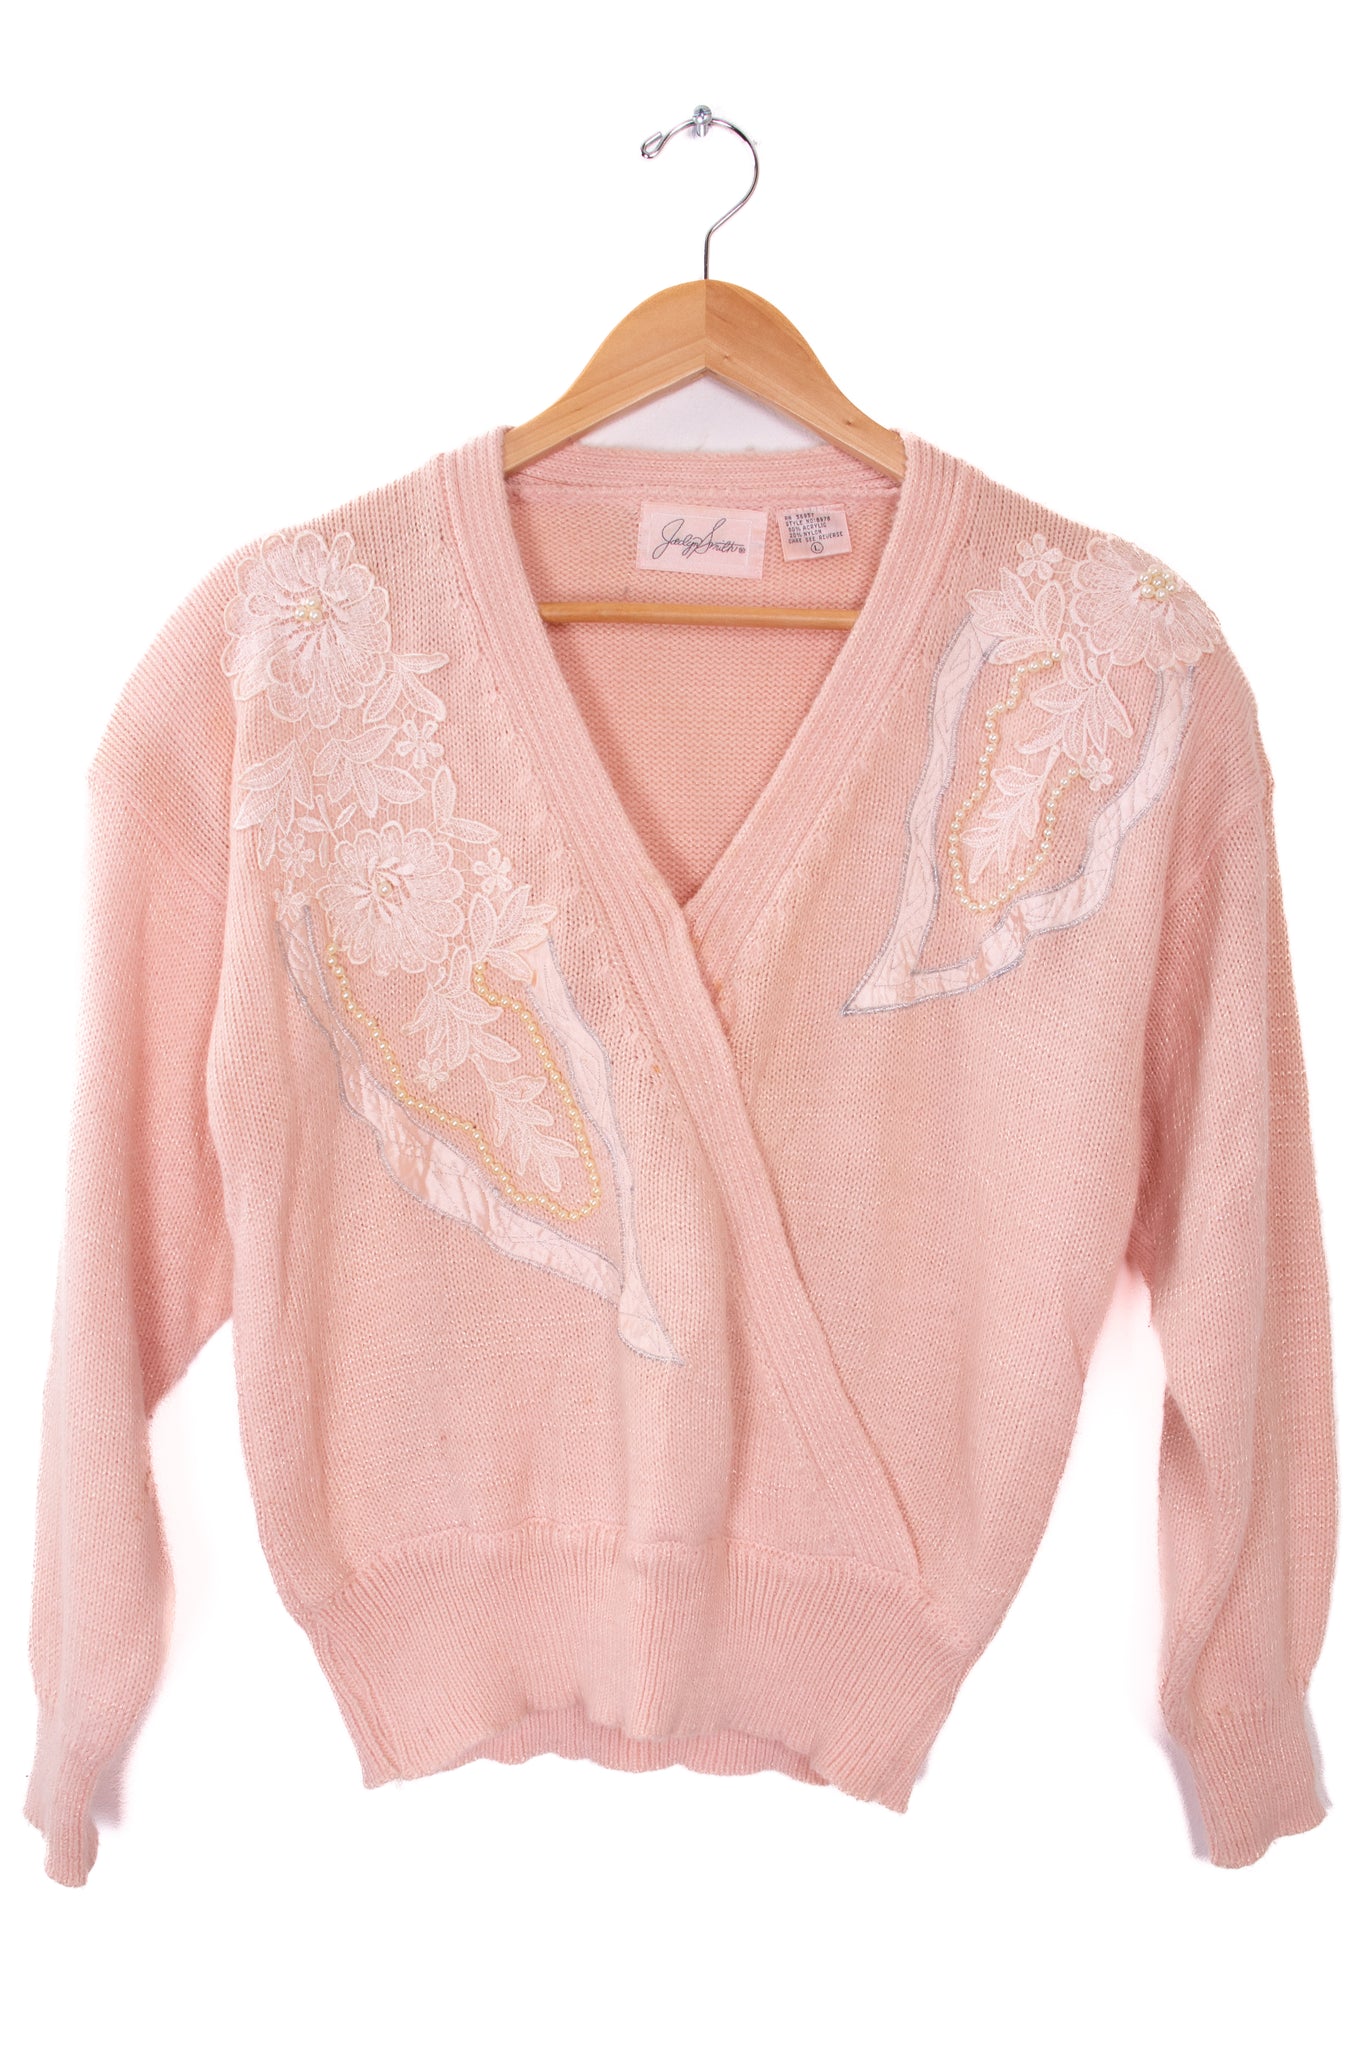 Jocelyn Smith Peachy Pink Pearls Sweater